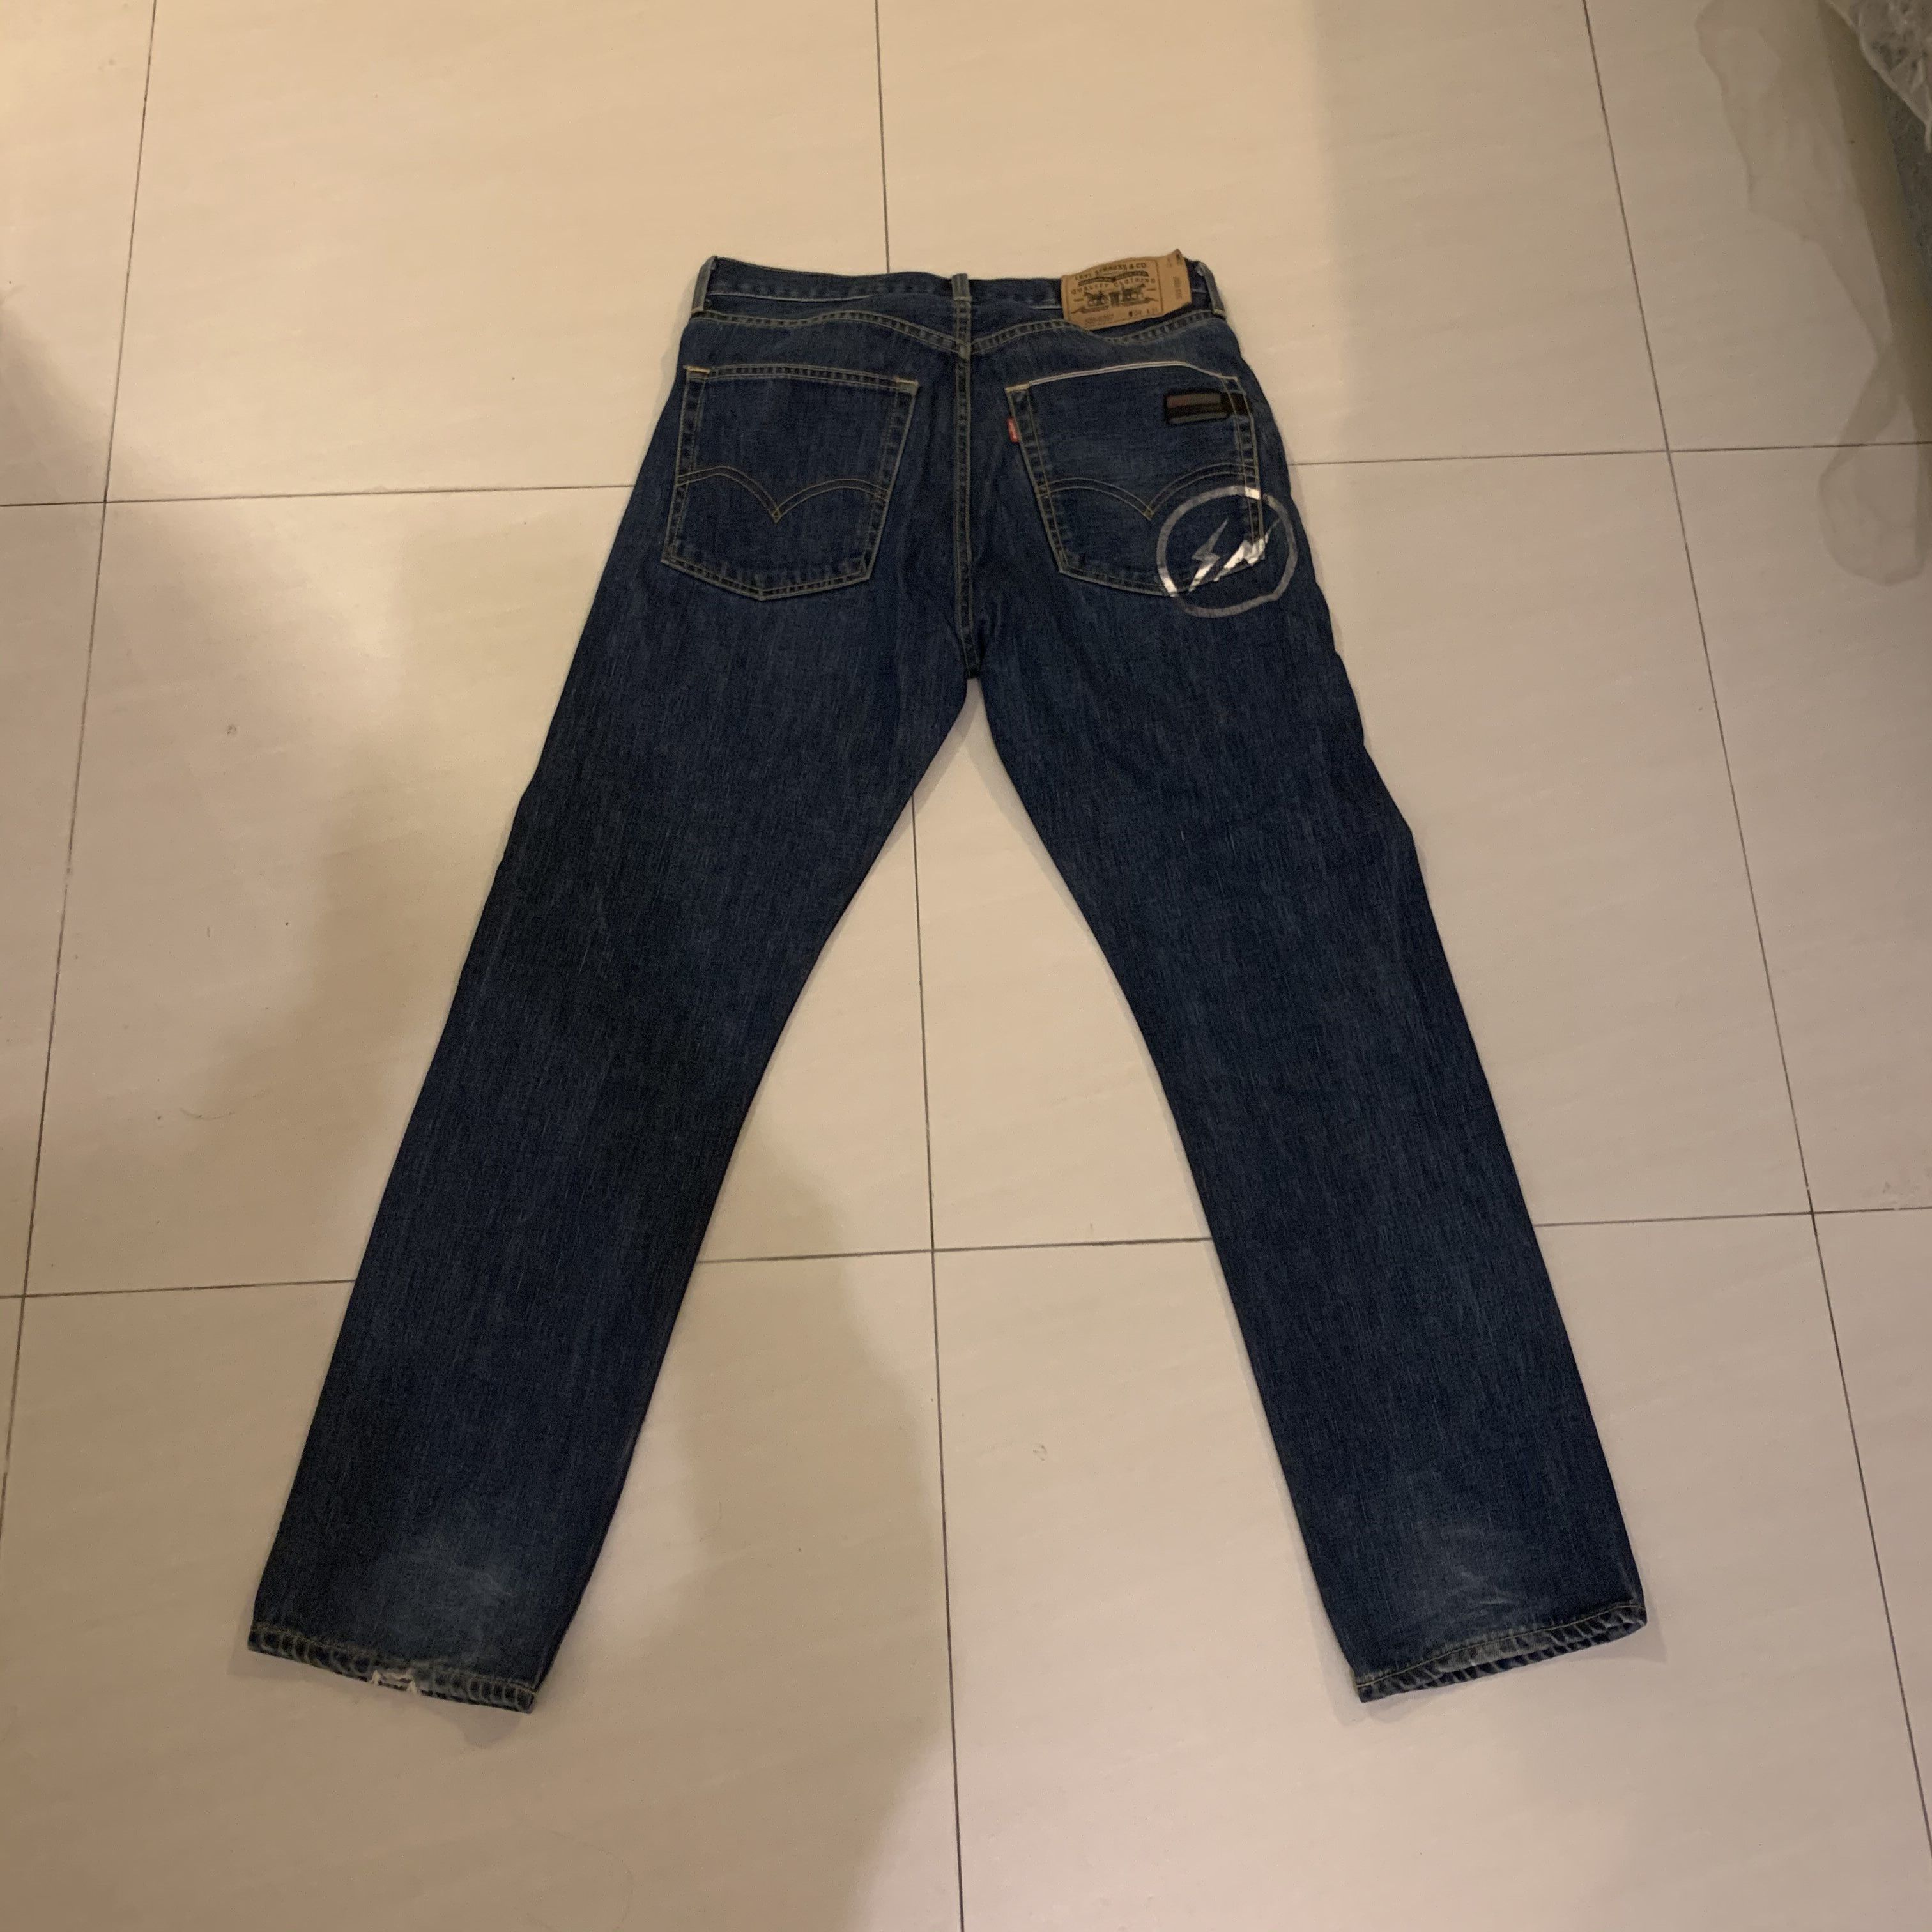 Levi's Levi's x Fragment Design Fenom Jeans 505-0207 | Grailed